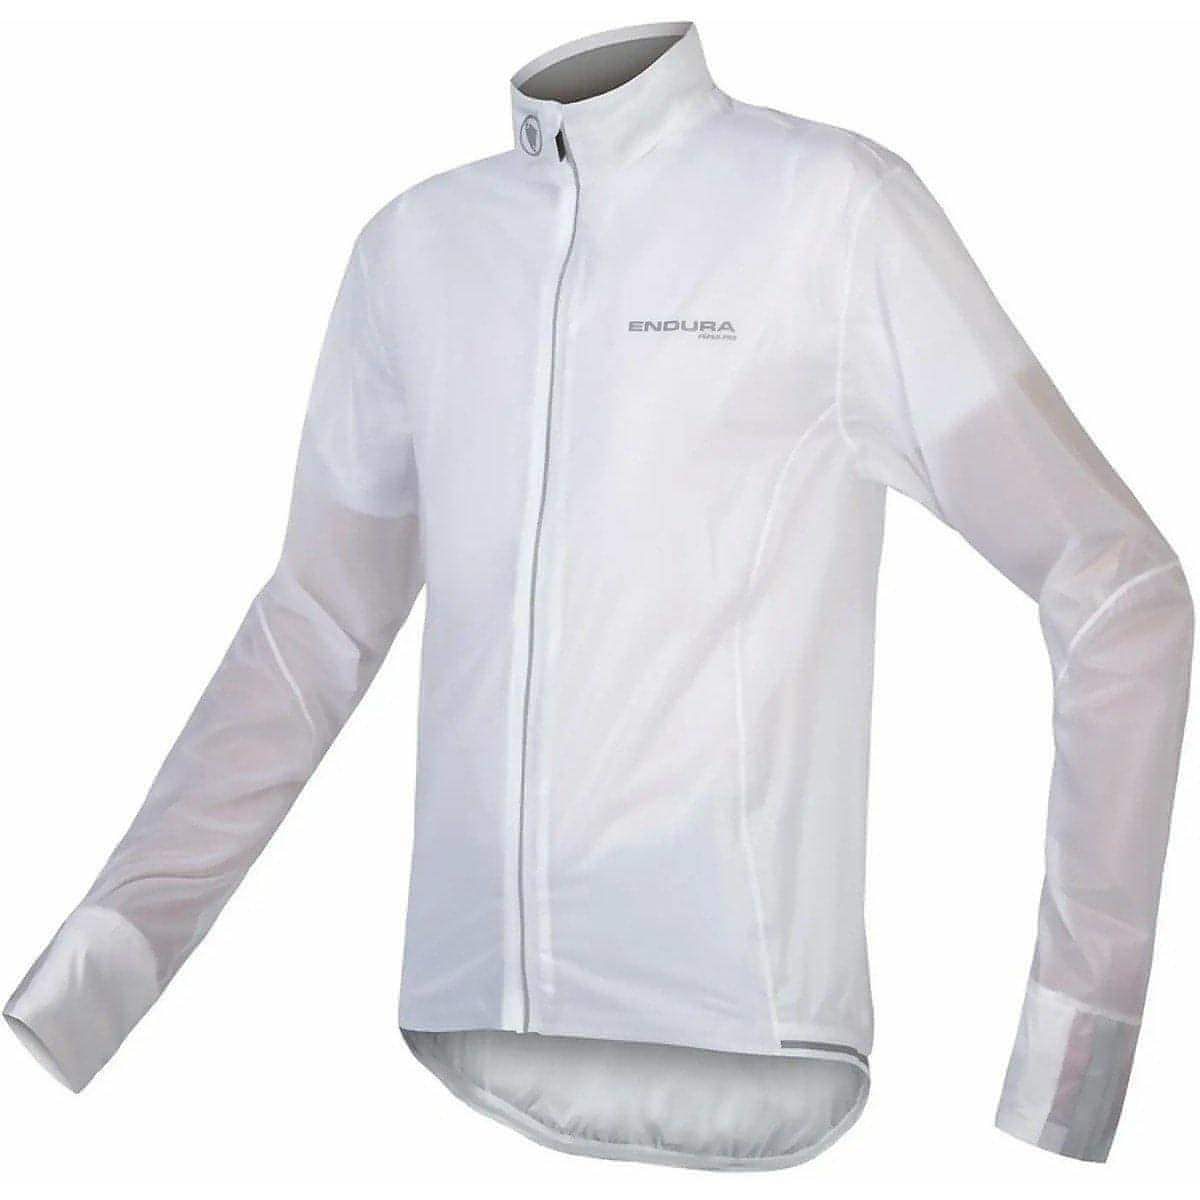 Endura FS260-Pro Adrenaline Race Cape II Mens Cycling Jacket - White 5055939935355 - Start Fitness